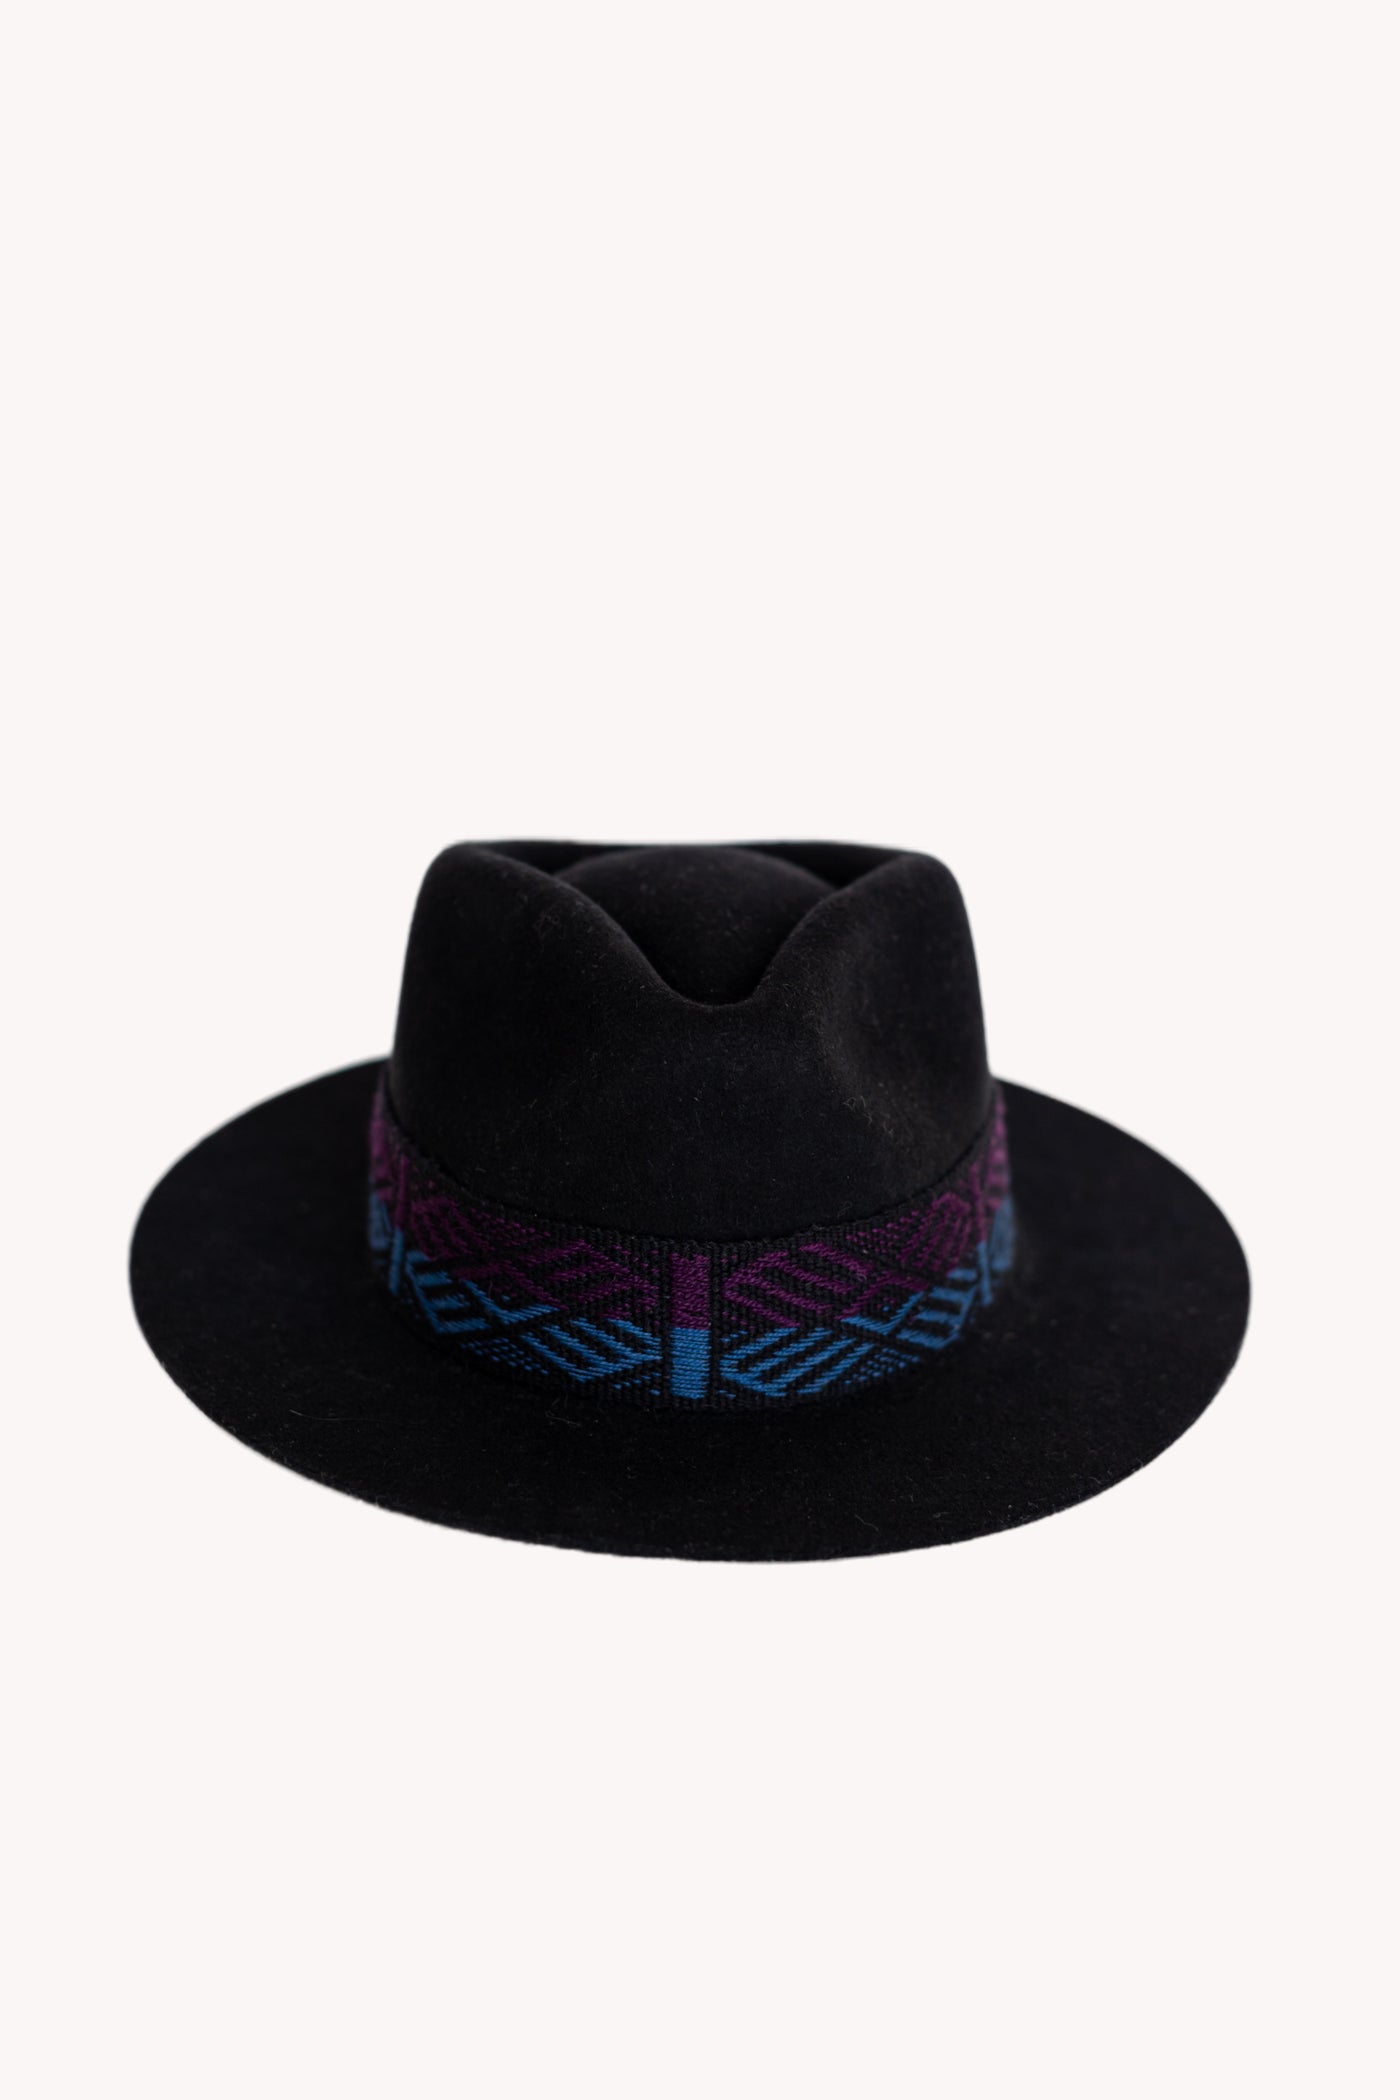 Black Fedora style alpaca wool hat